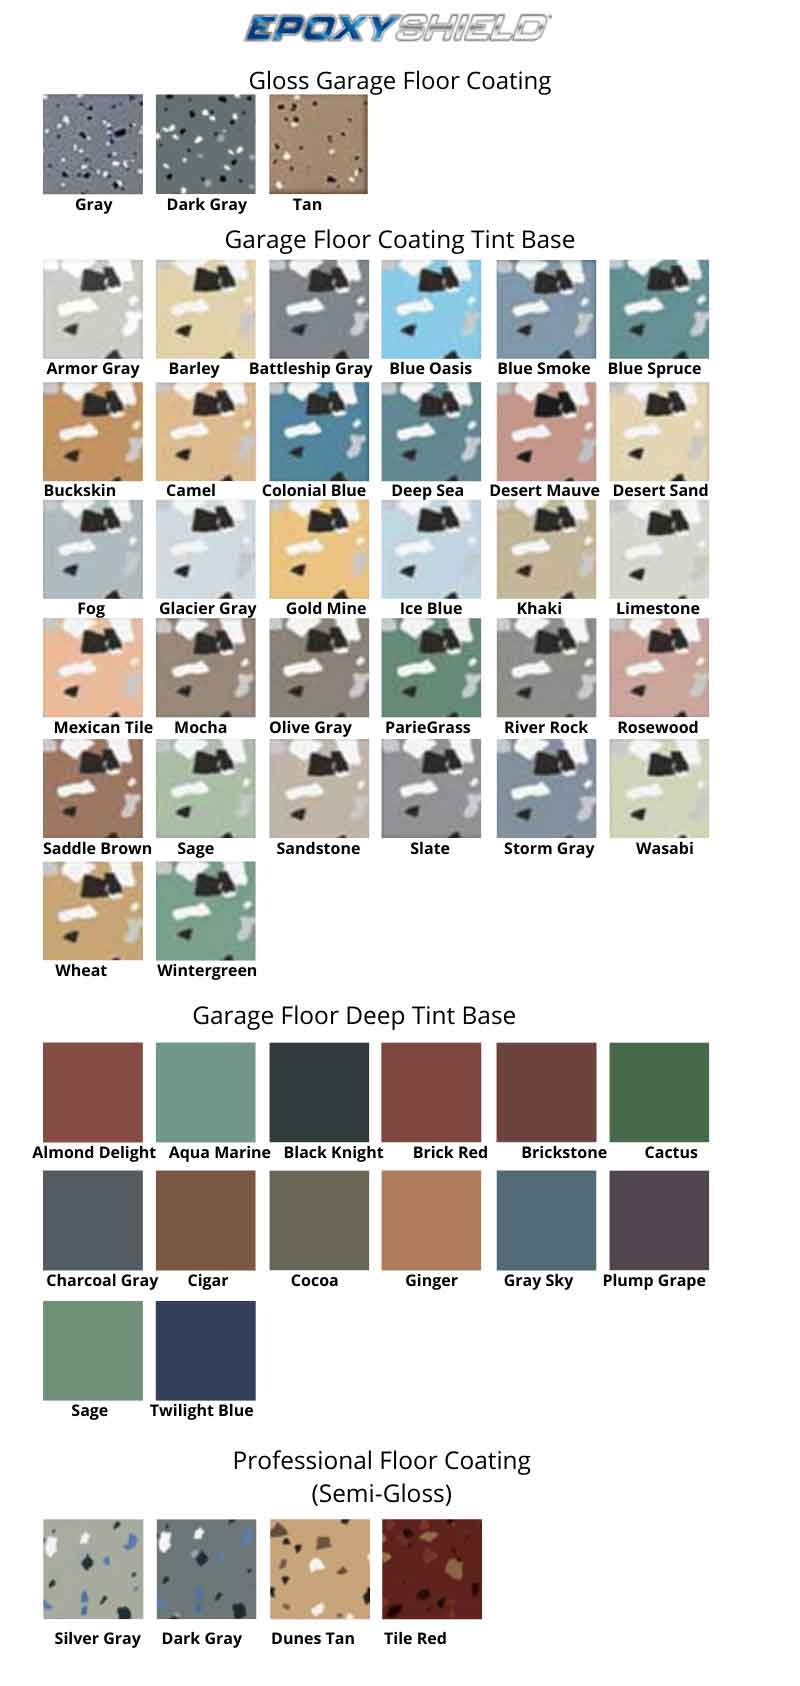 Rust-Oleum EpoxyShield color options